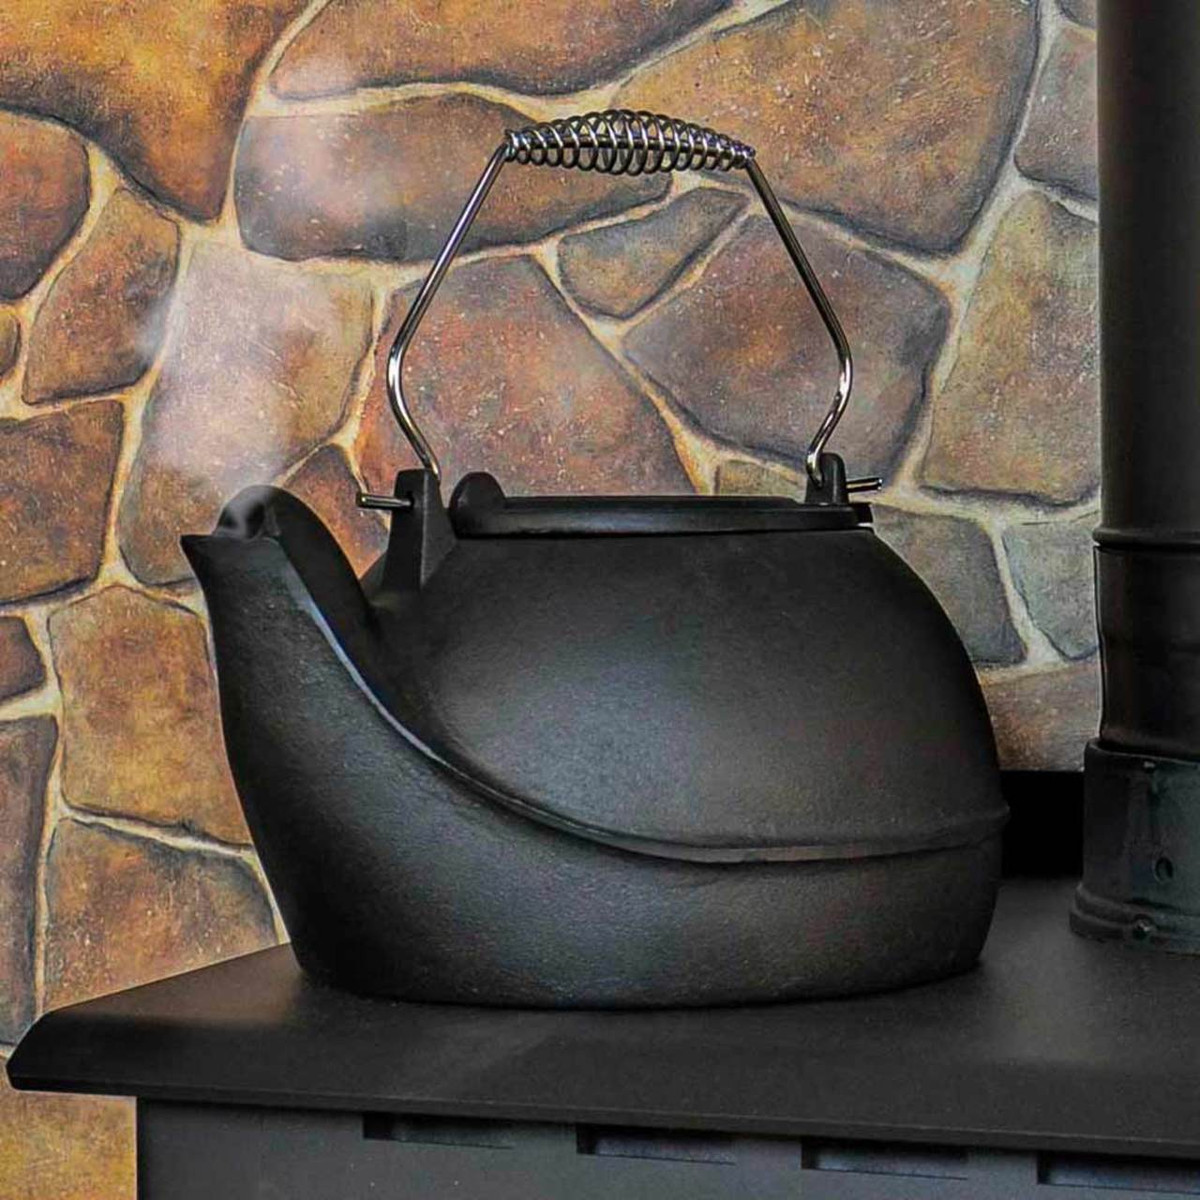 Small 2 1/2 qt cast iron tea kettle humidifier, steamer